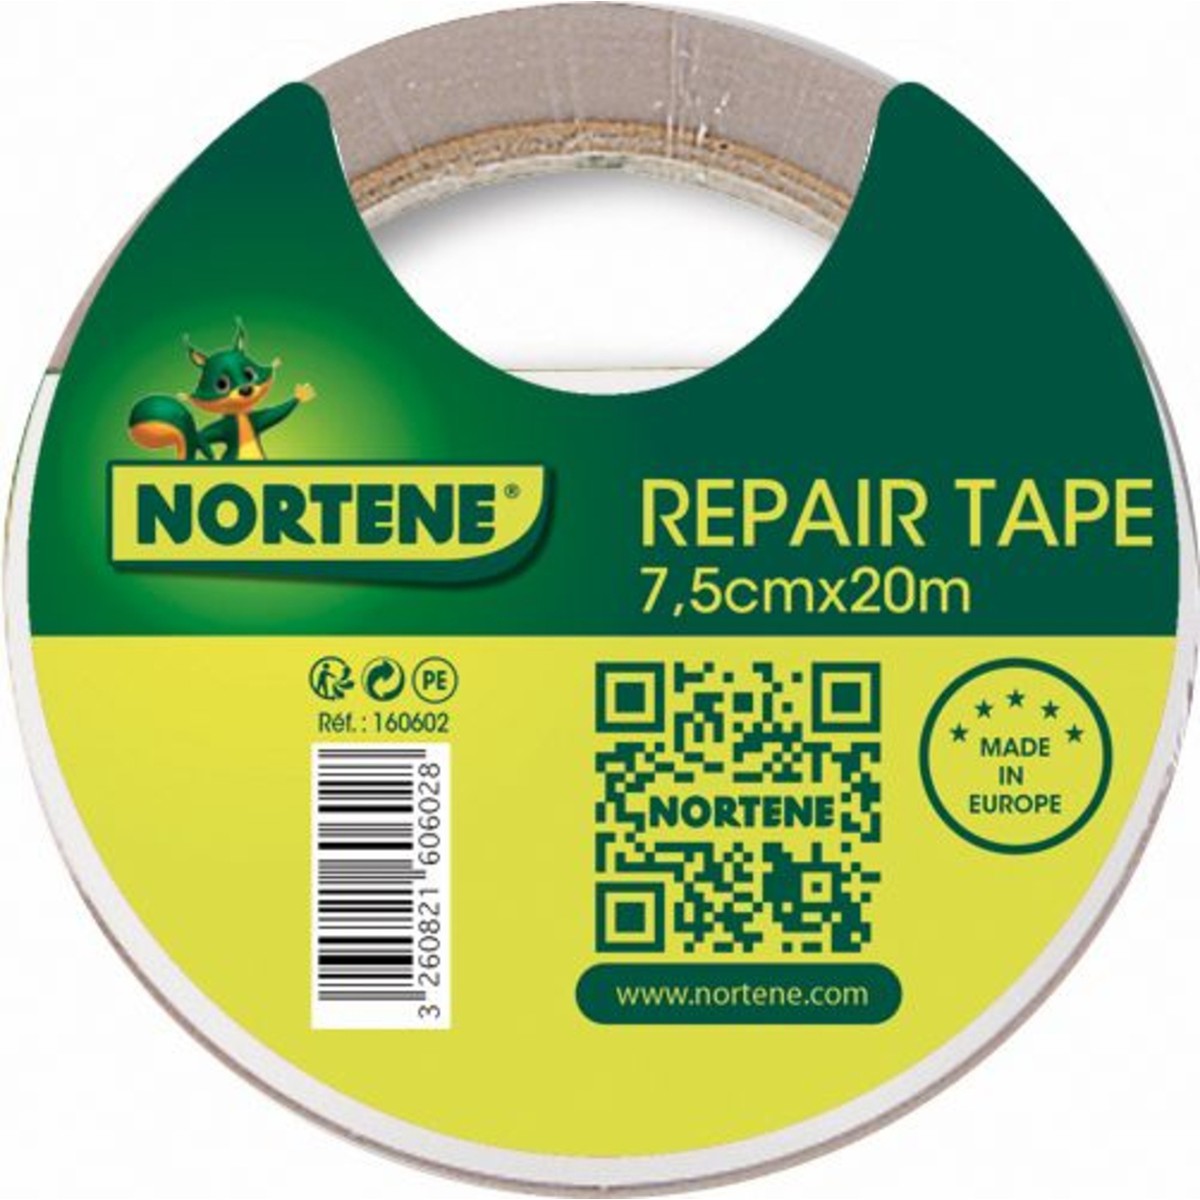 Nortene  REPAIR TAPE Adhésif répare baches  7.5cmx20m